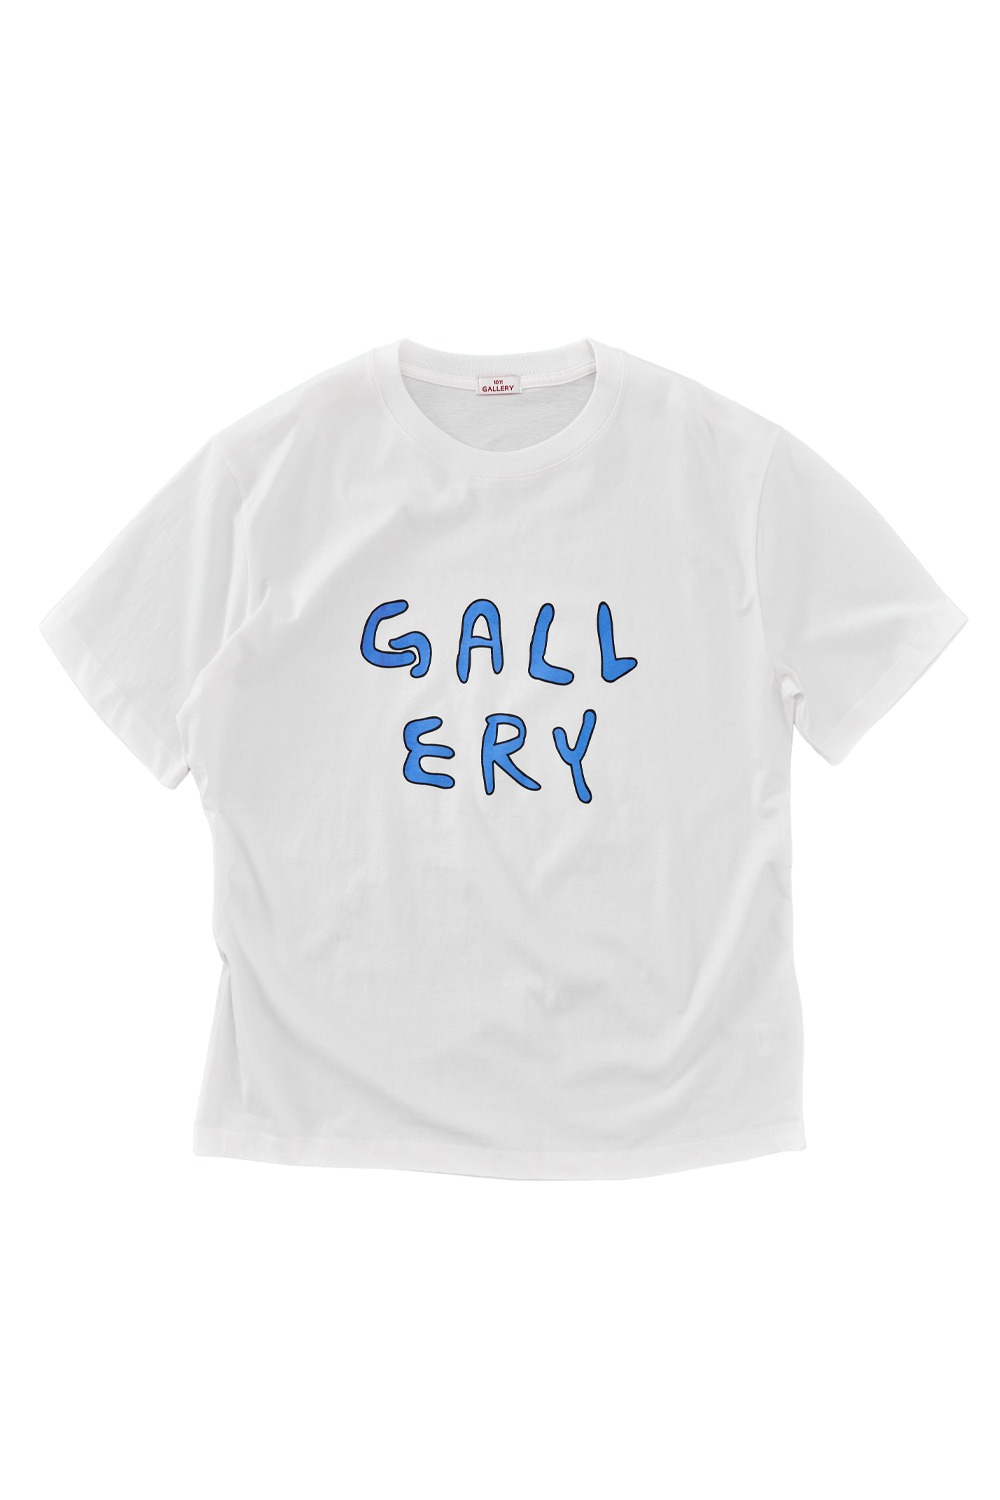 Gallery Stroke Logo T-Shirt-White